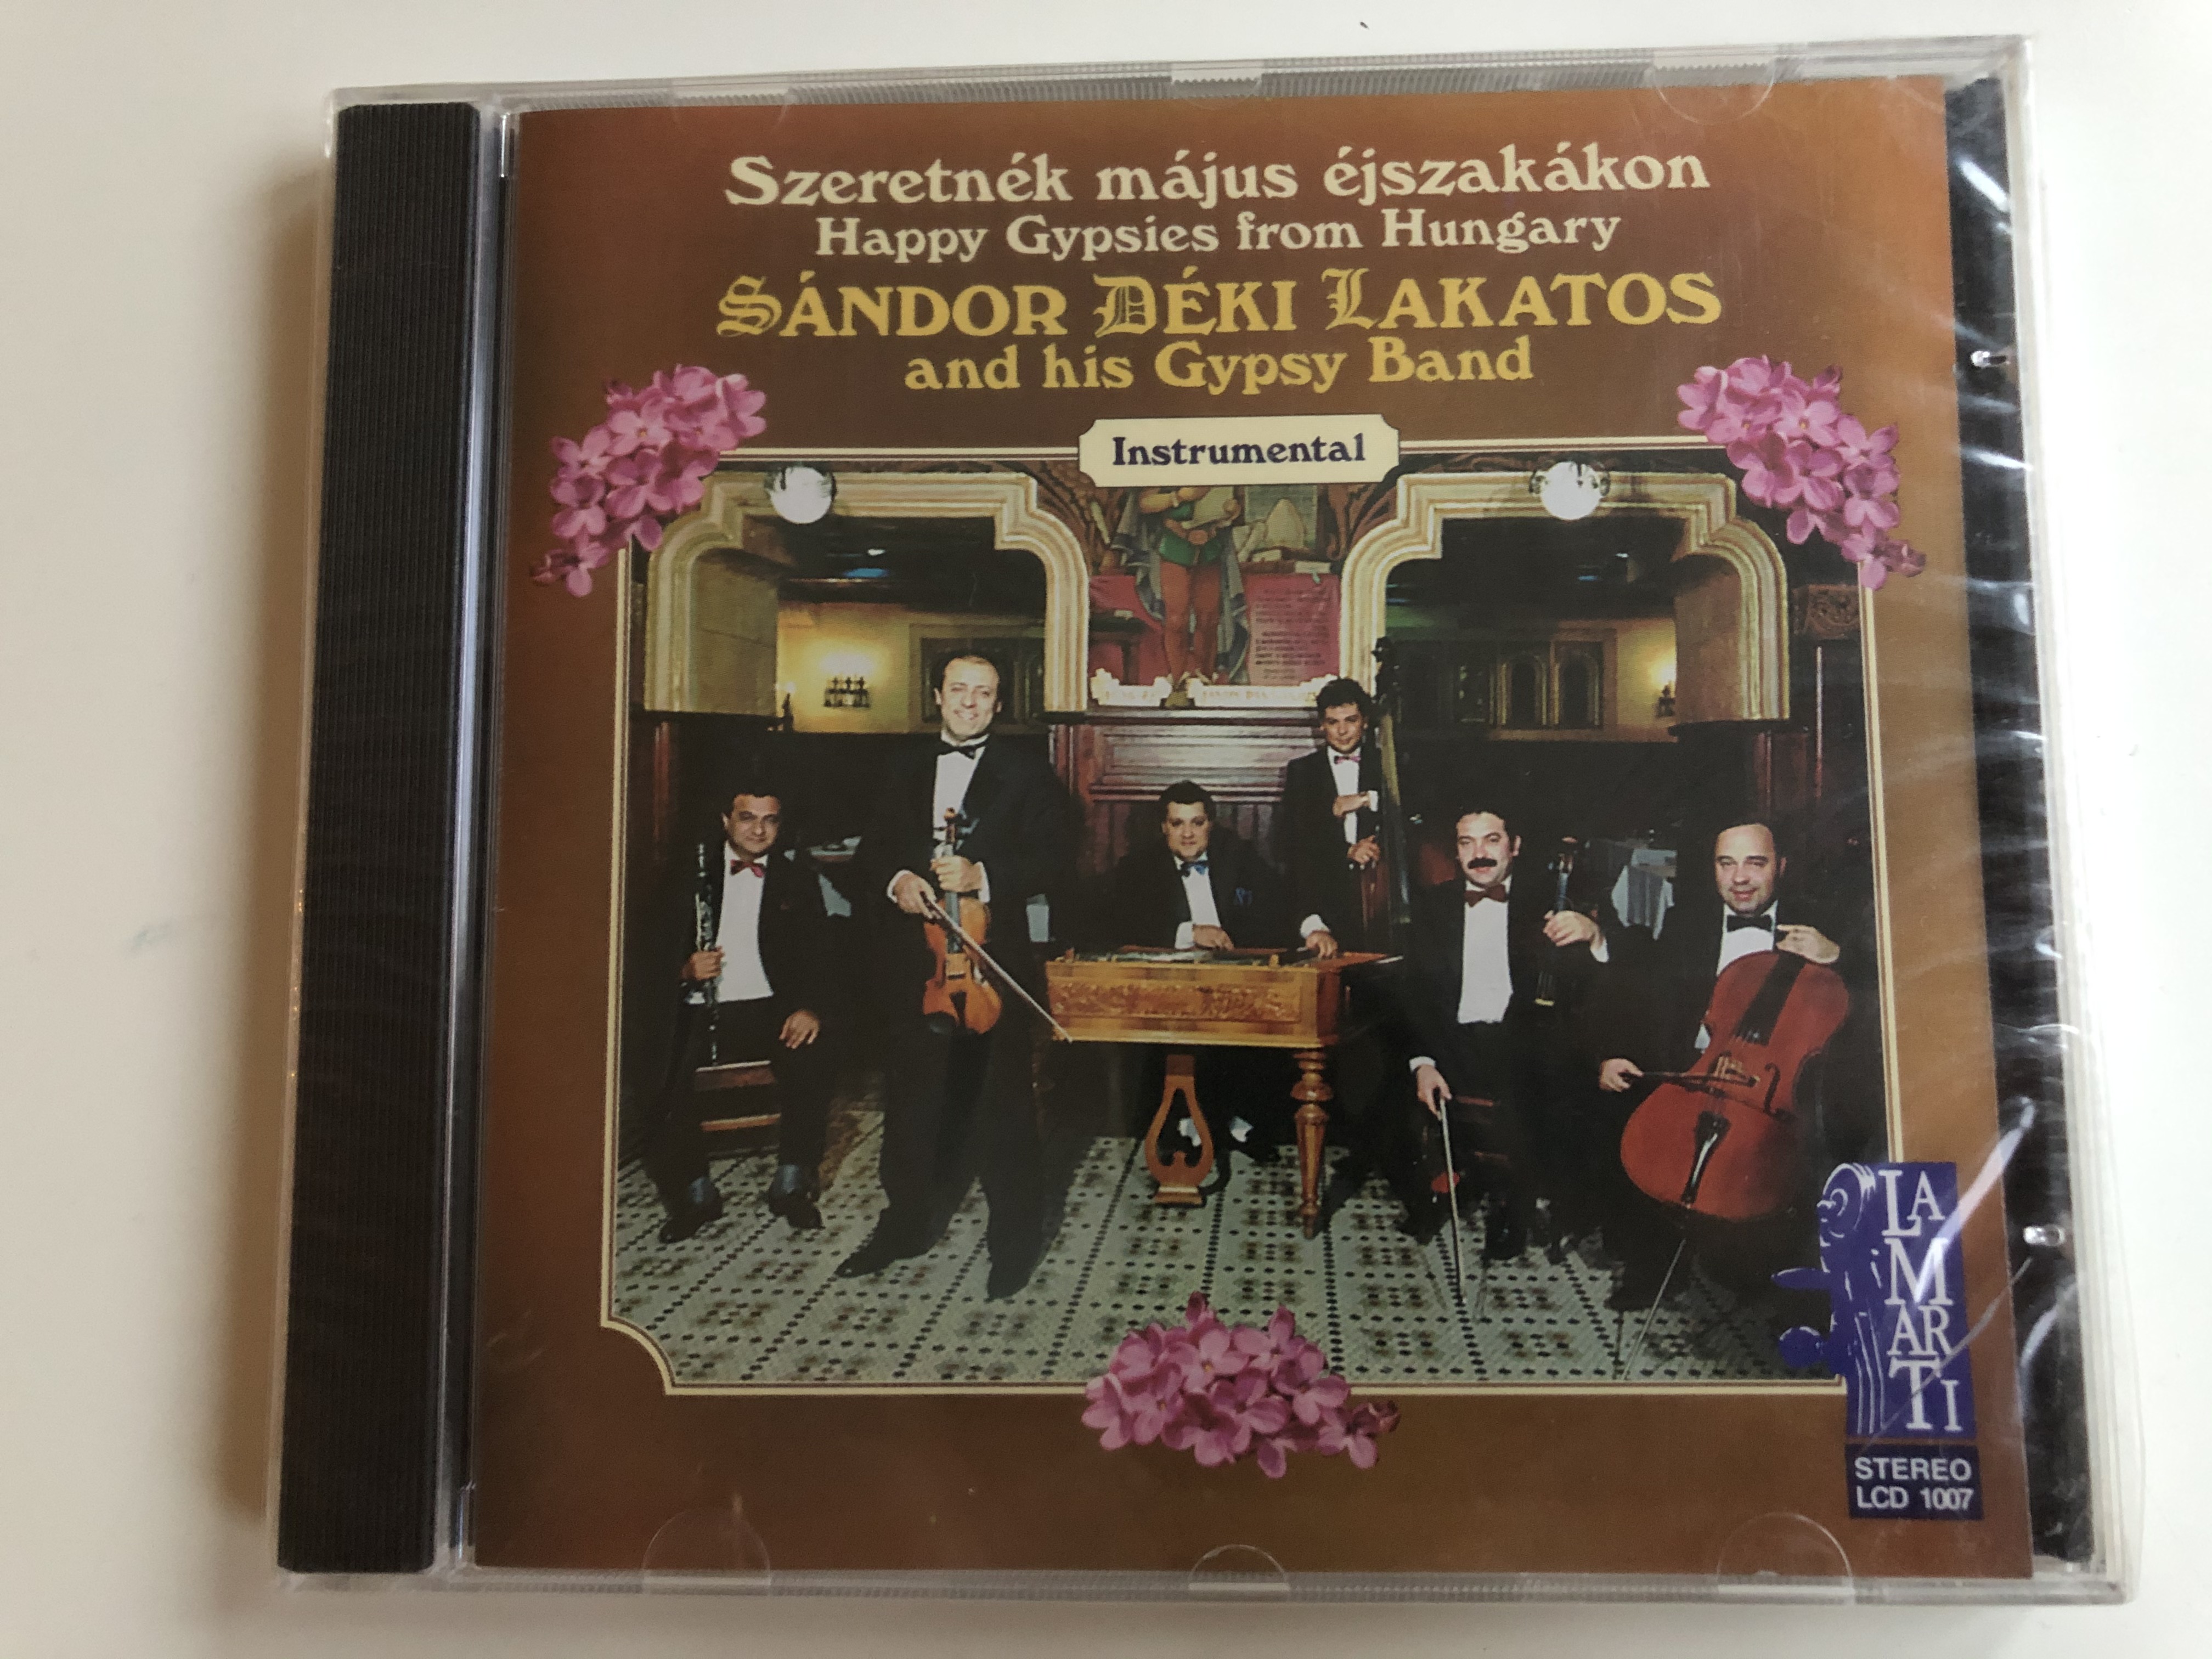 szeretn-k-m-jus-jszak-kon-happy-gypsies-from-hungary-s-ndor-d-ki-lakatos-and-his-gipsy-band-instrumental-lamarti-audio-cd-1997-stereo-lcd-1007-1-.jpg